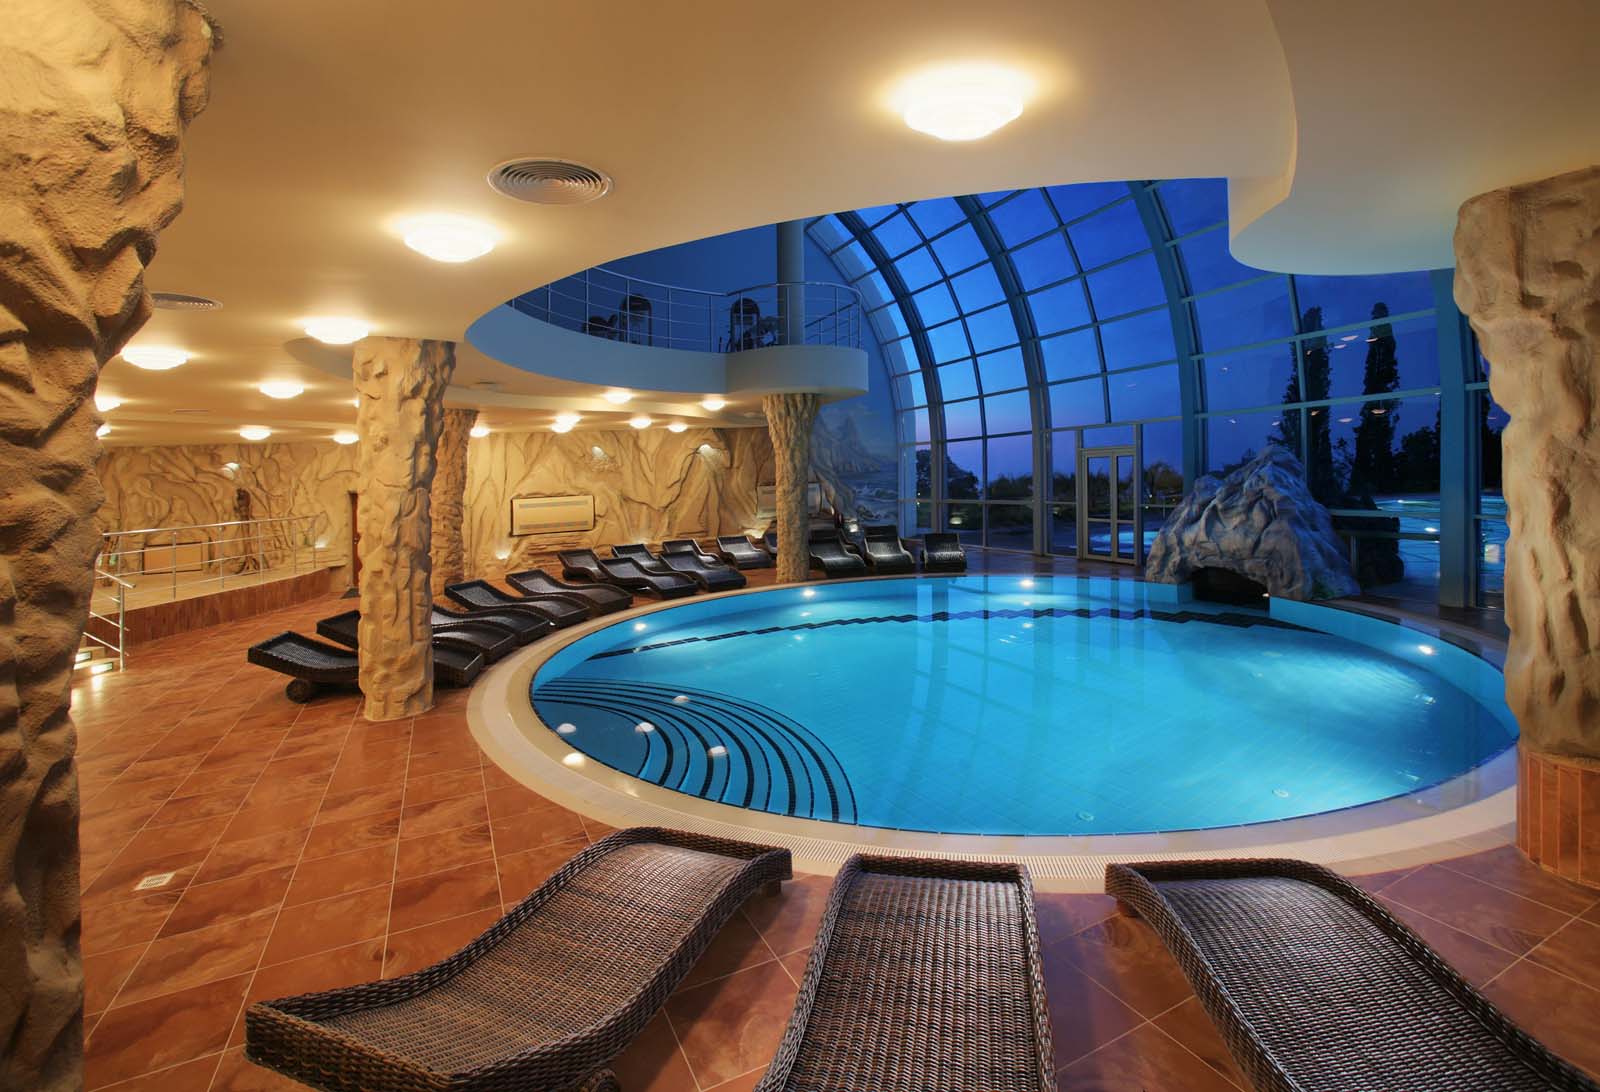  Indoor Pool Home With Luxury Interior